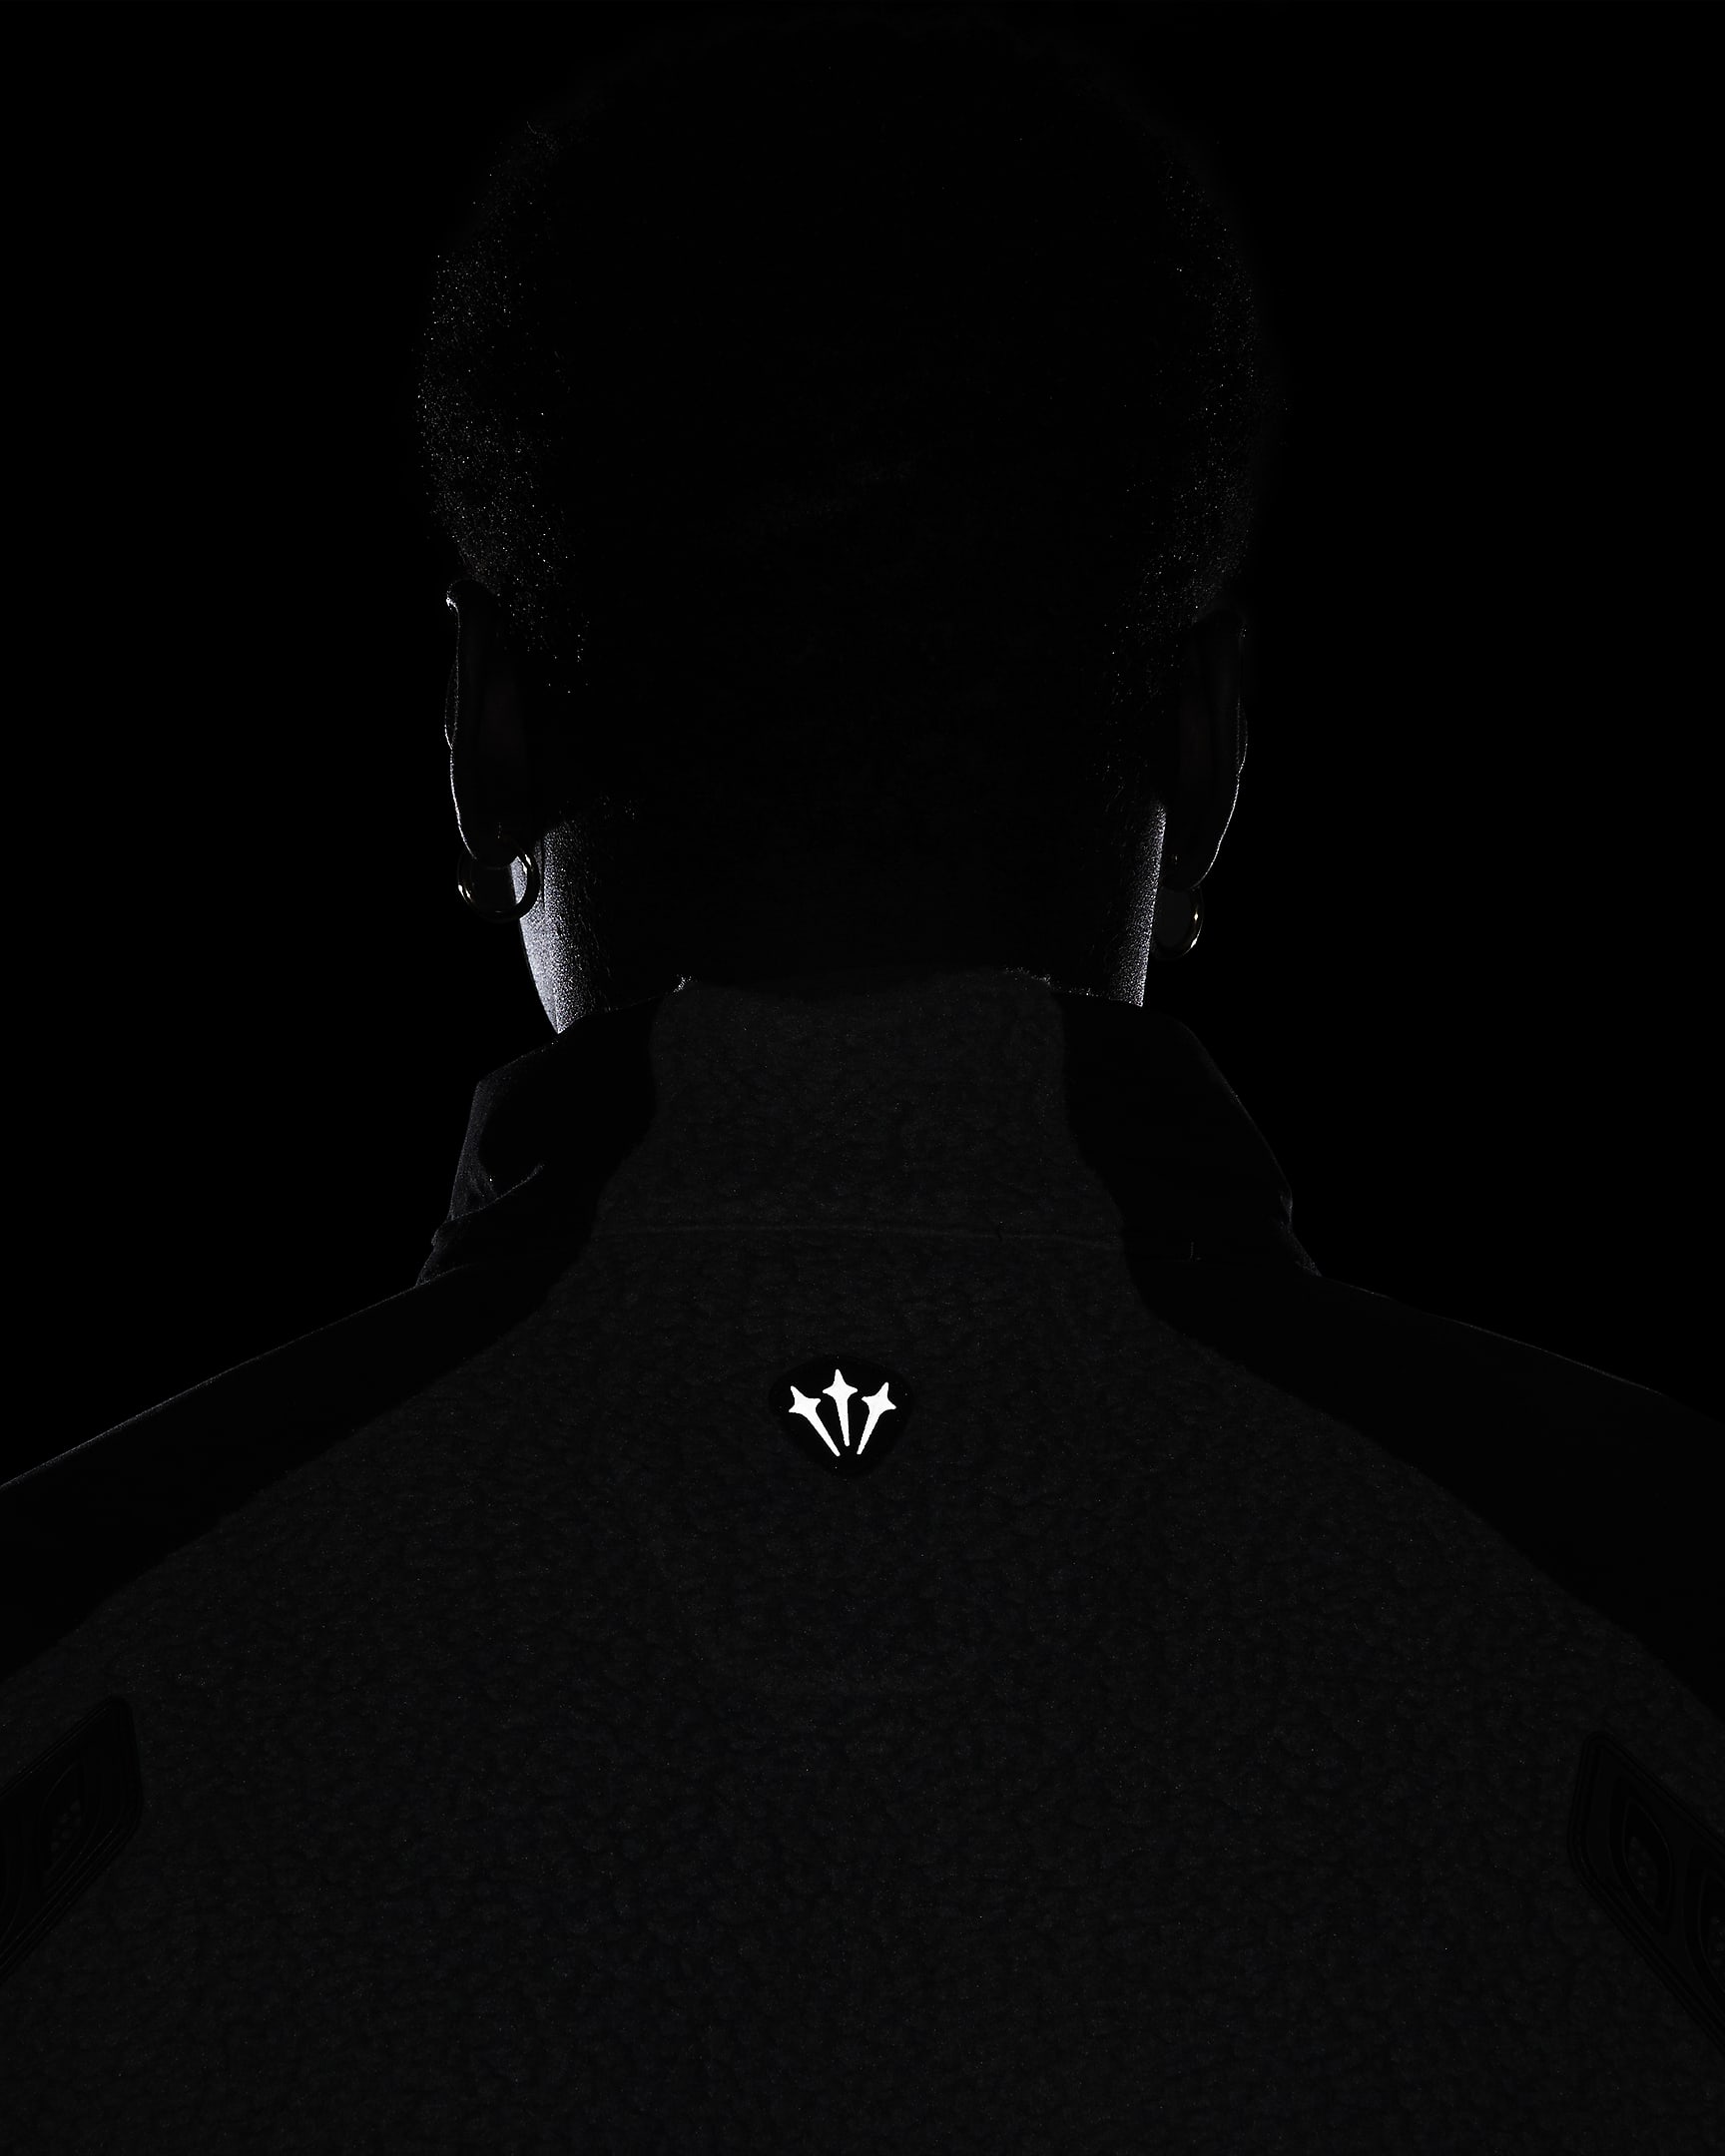 NOCTA Men's Full Zip Track Jacket. Nike JP